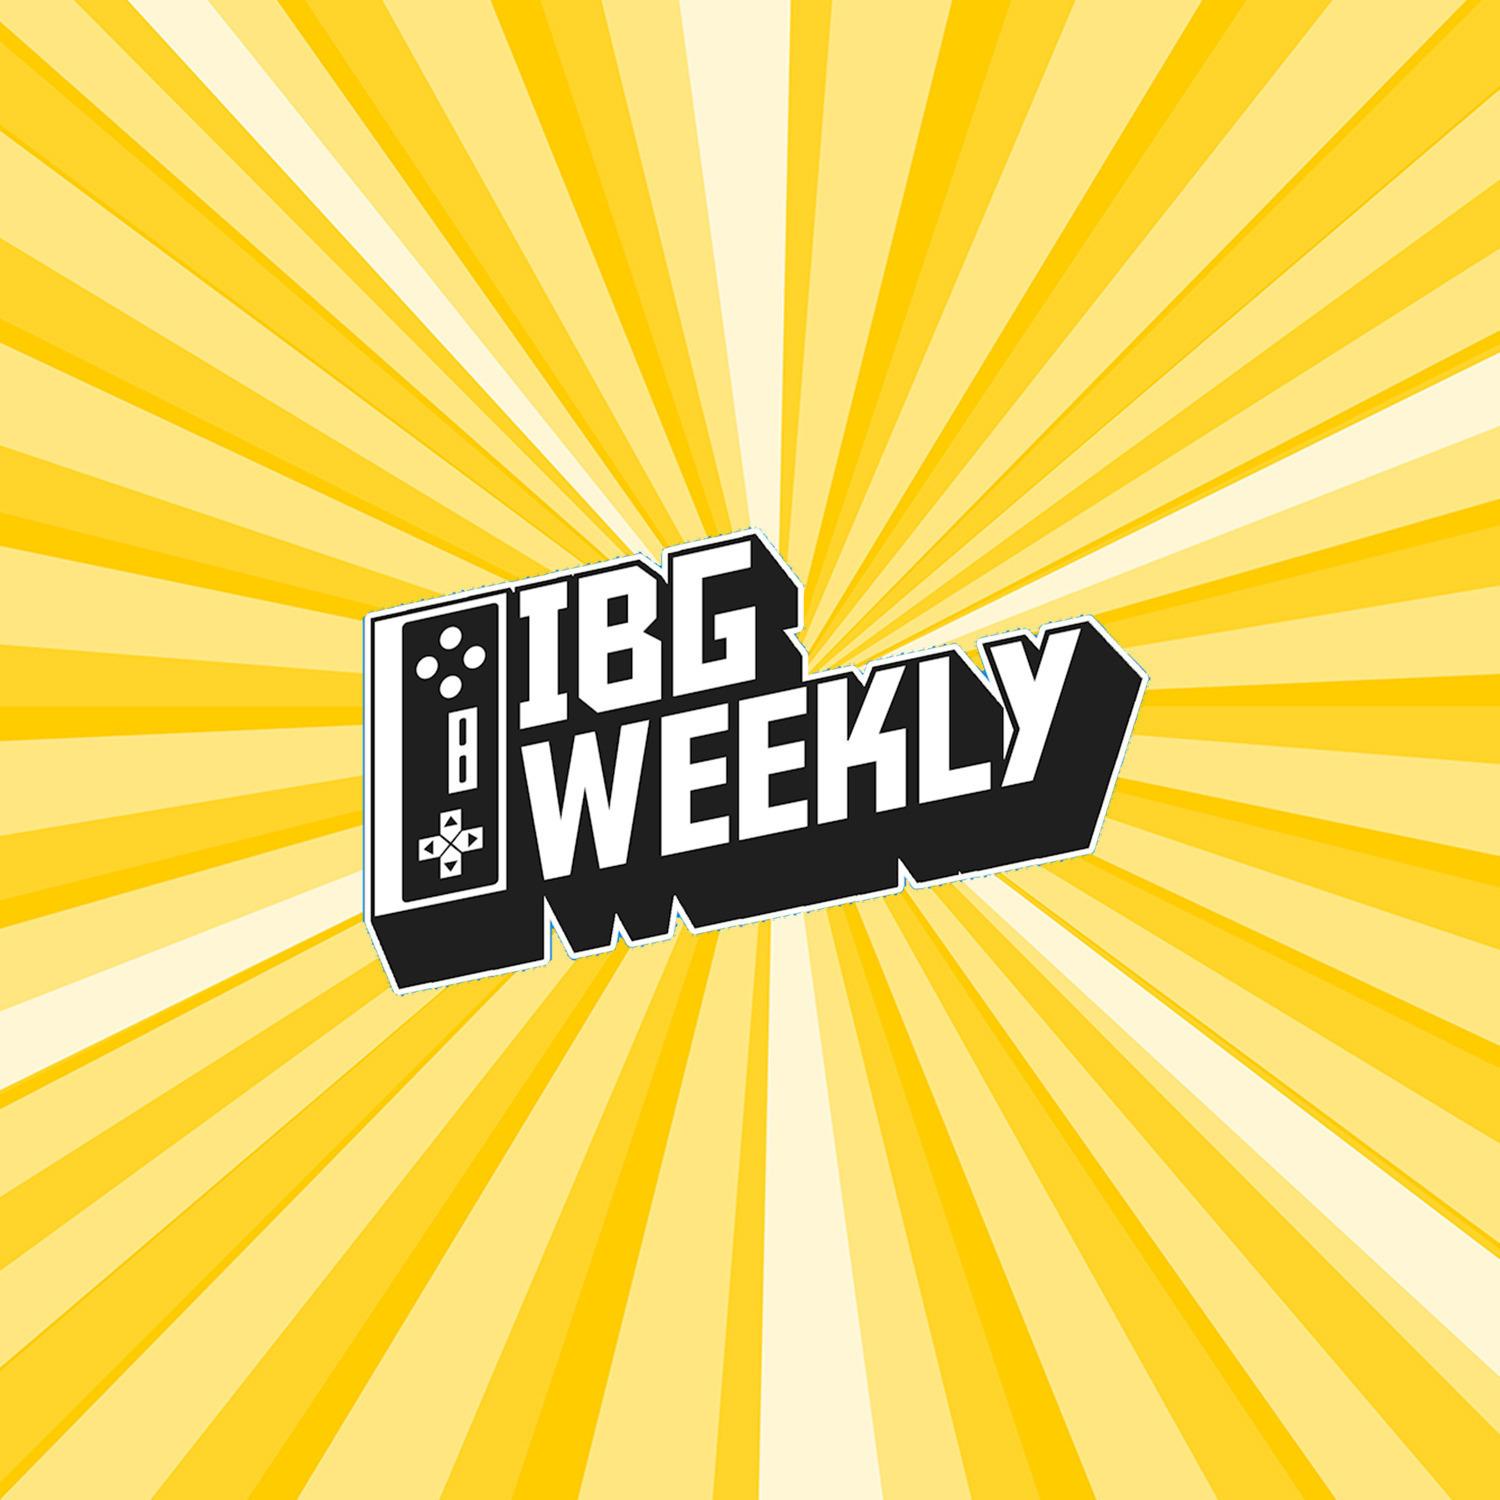 IBG Weekly